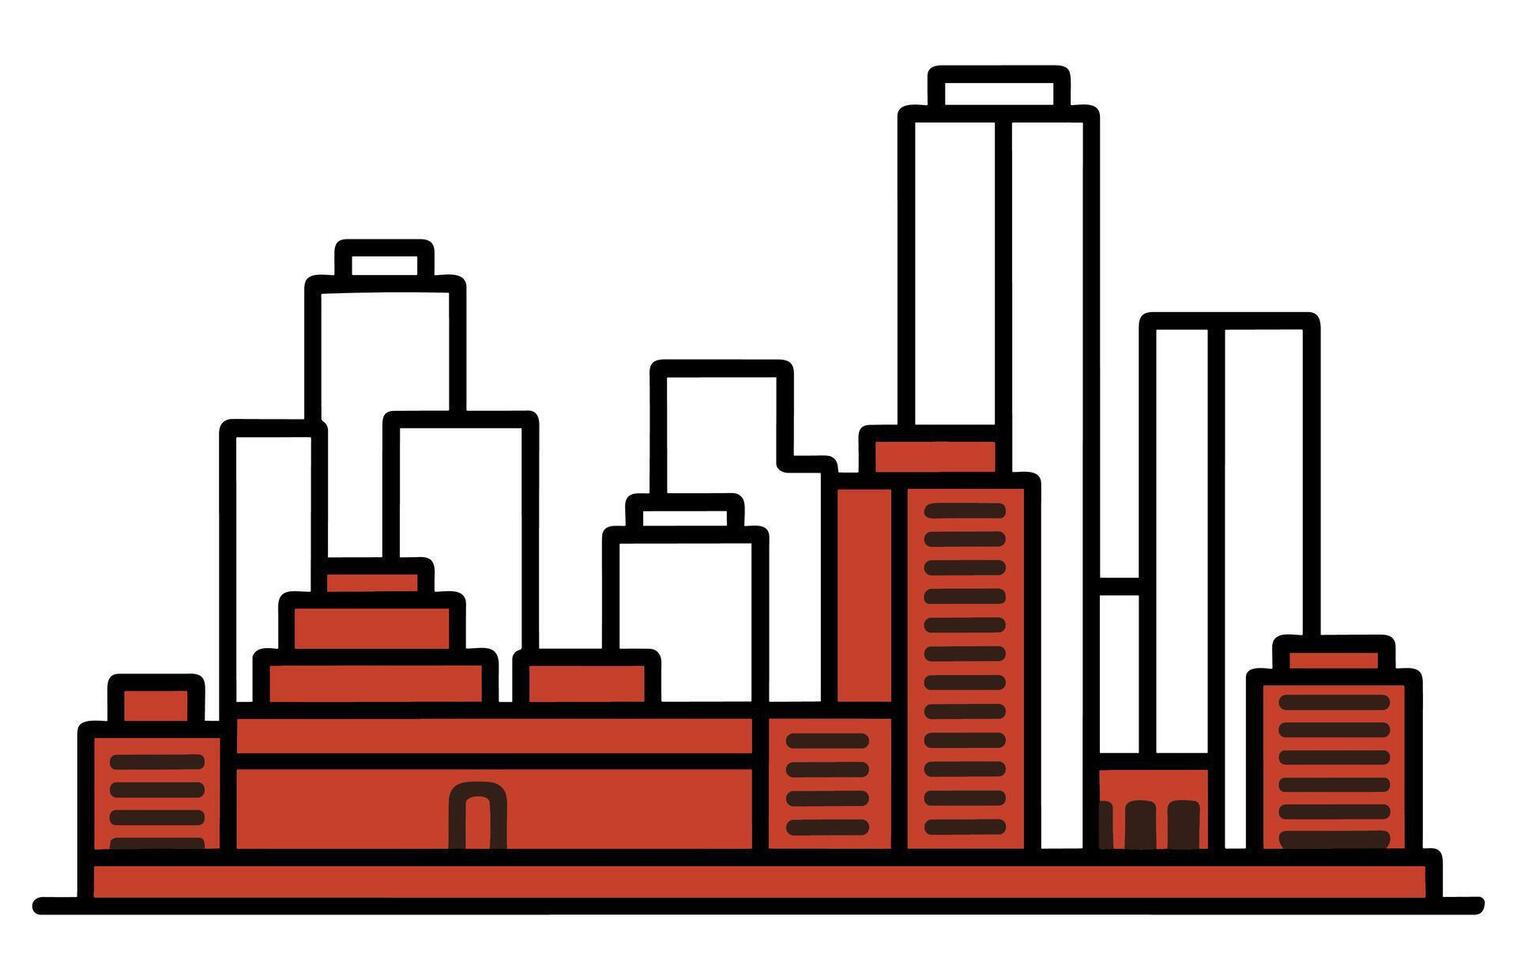 Houston city skyline vector illustration, Houston Skyline City Outline Skyline Silhouette Vector Illustration.